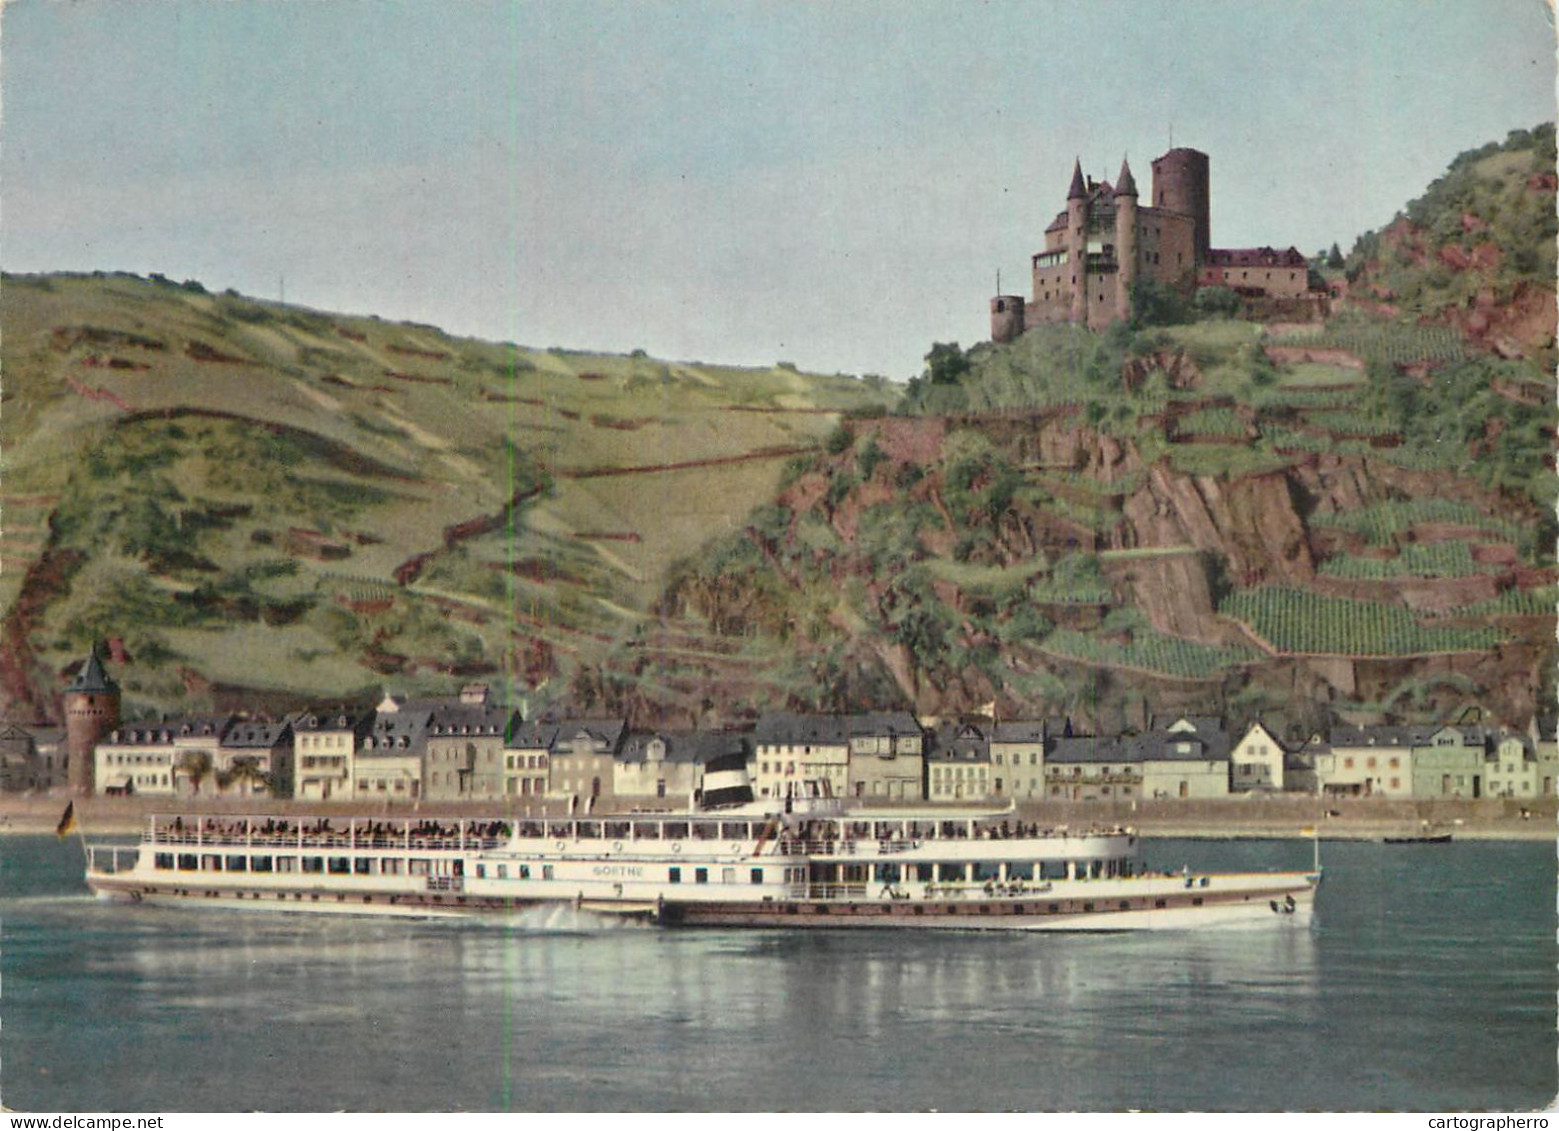 Navigation Sailing Vessels & Boats Themed Postcard Burg Katz Am Rhein Pleasure Cruise - Sailing Vessels